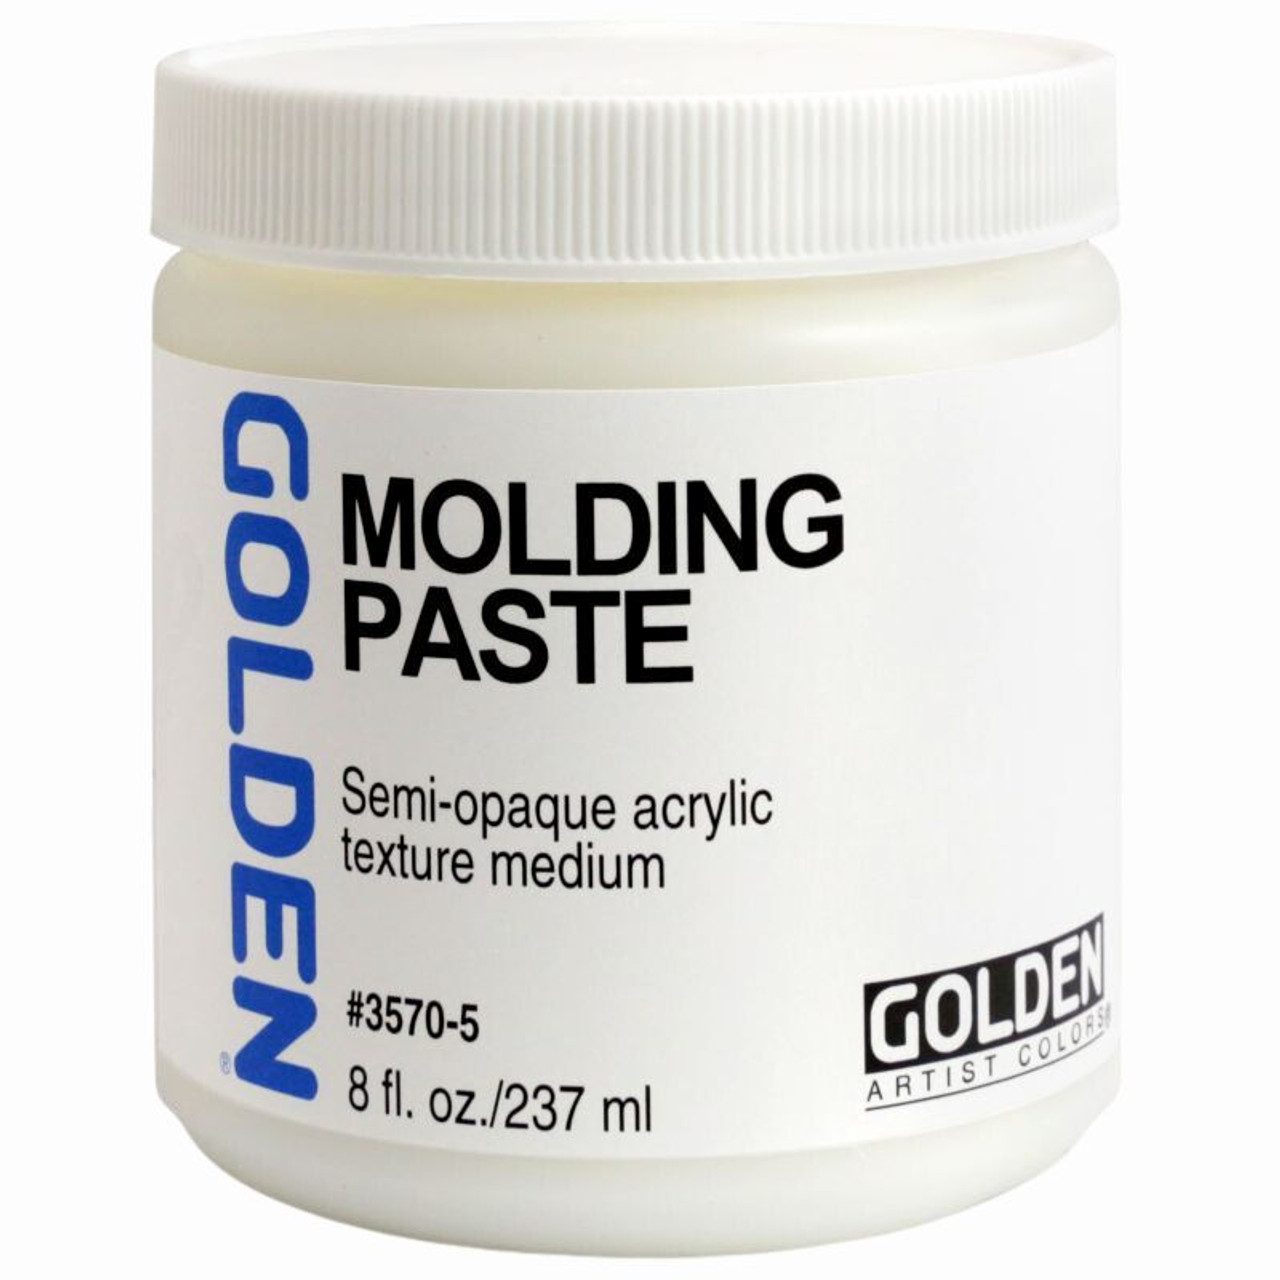 Golden Hard Molding Paste 16 oz